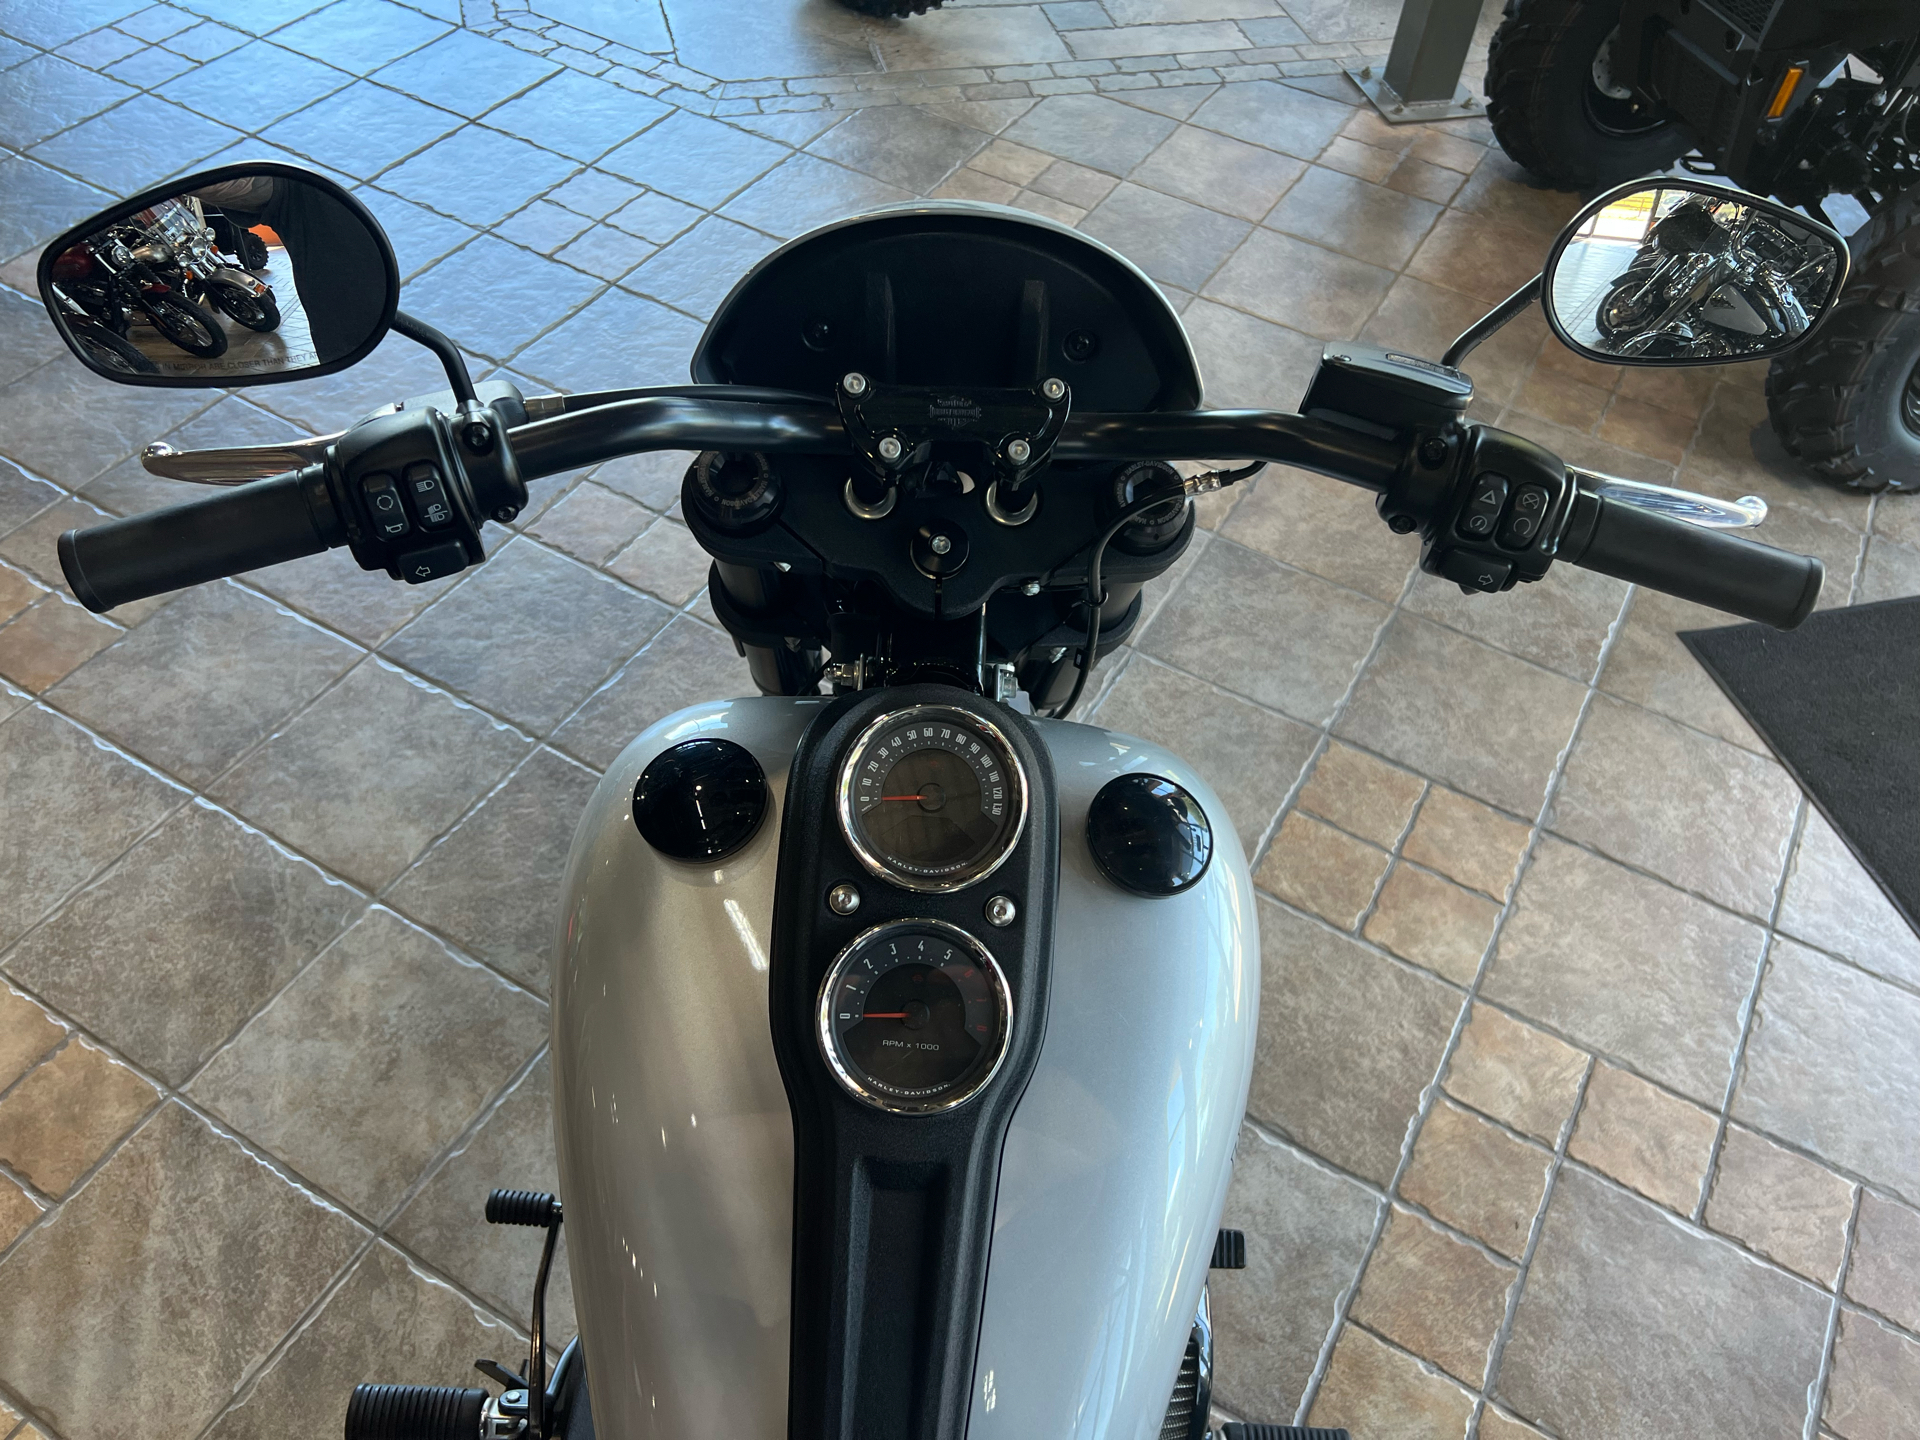 2020 Harley-Davidson Low Rider®S in Monroe, Michigan - Photo 20